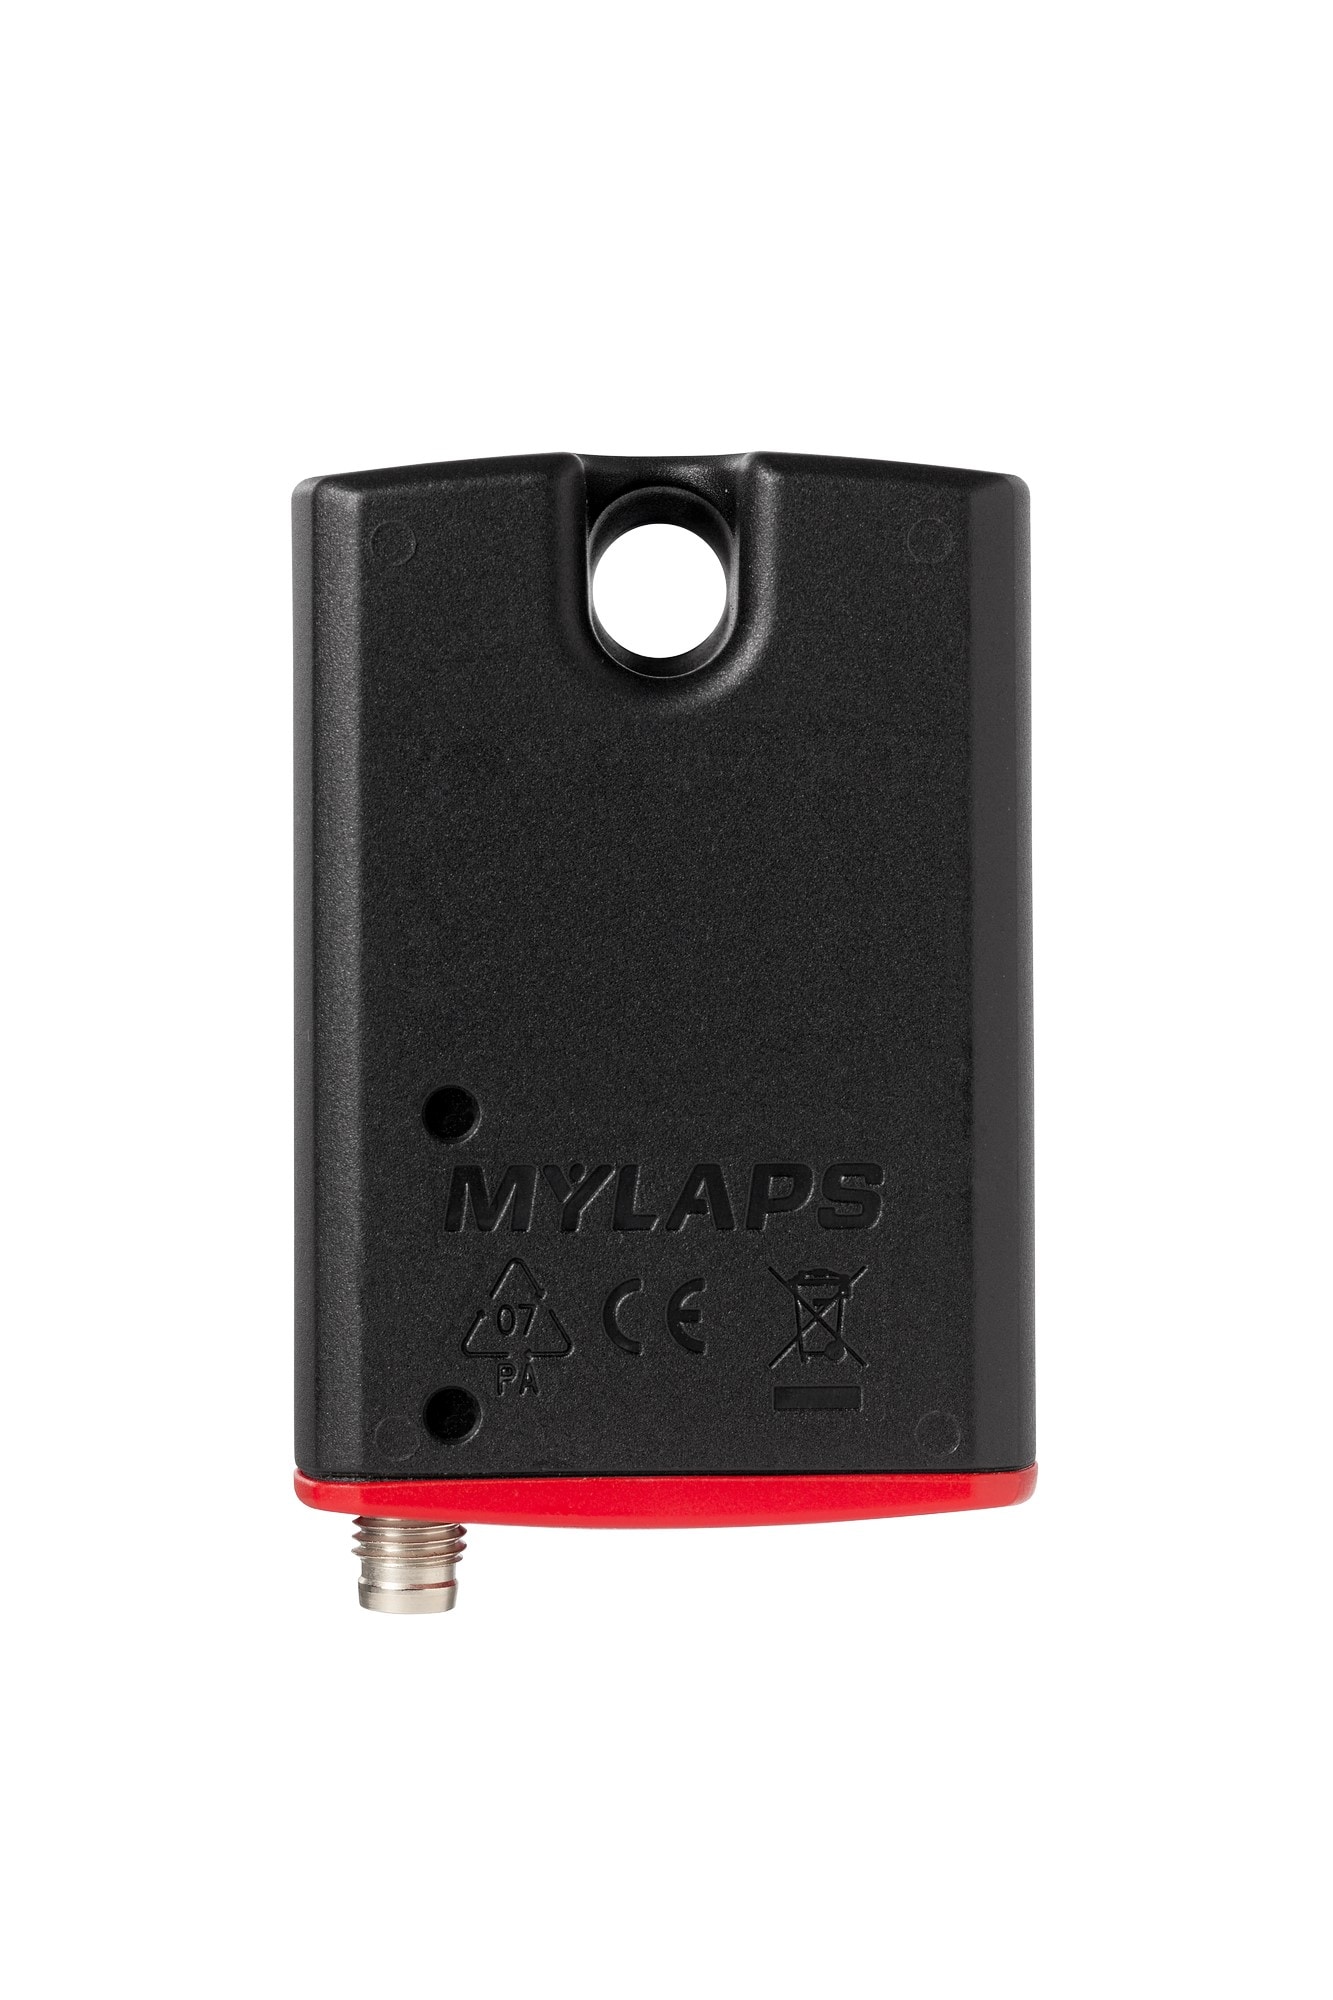 Transponder MyLaps TR2 Bil/MC Direct Power 5år